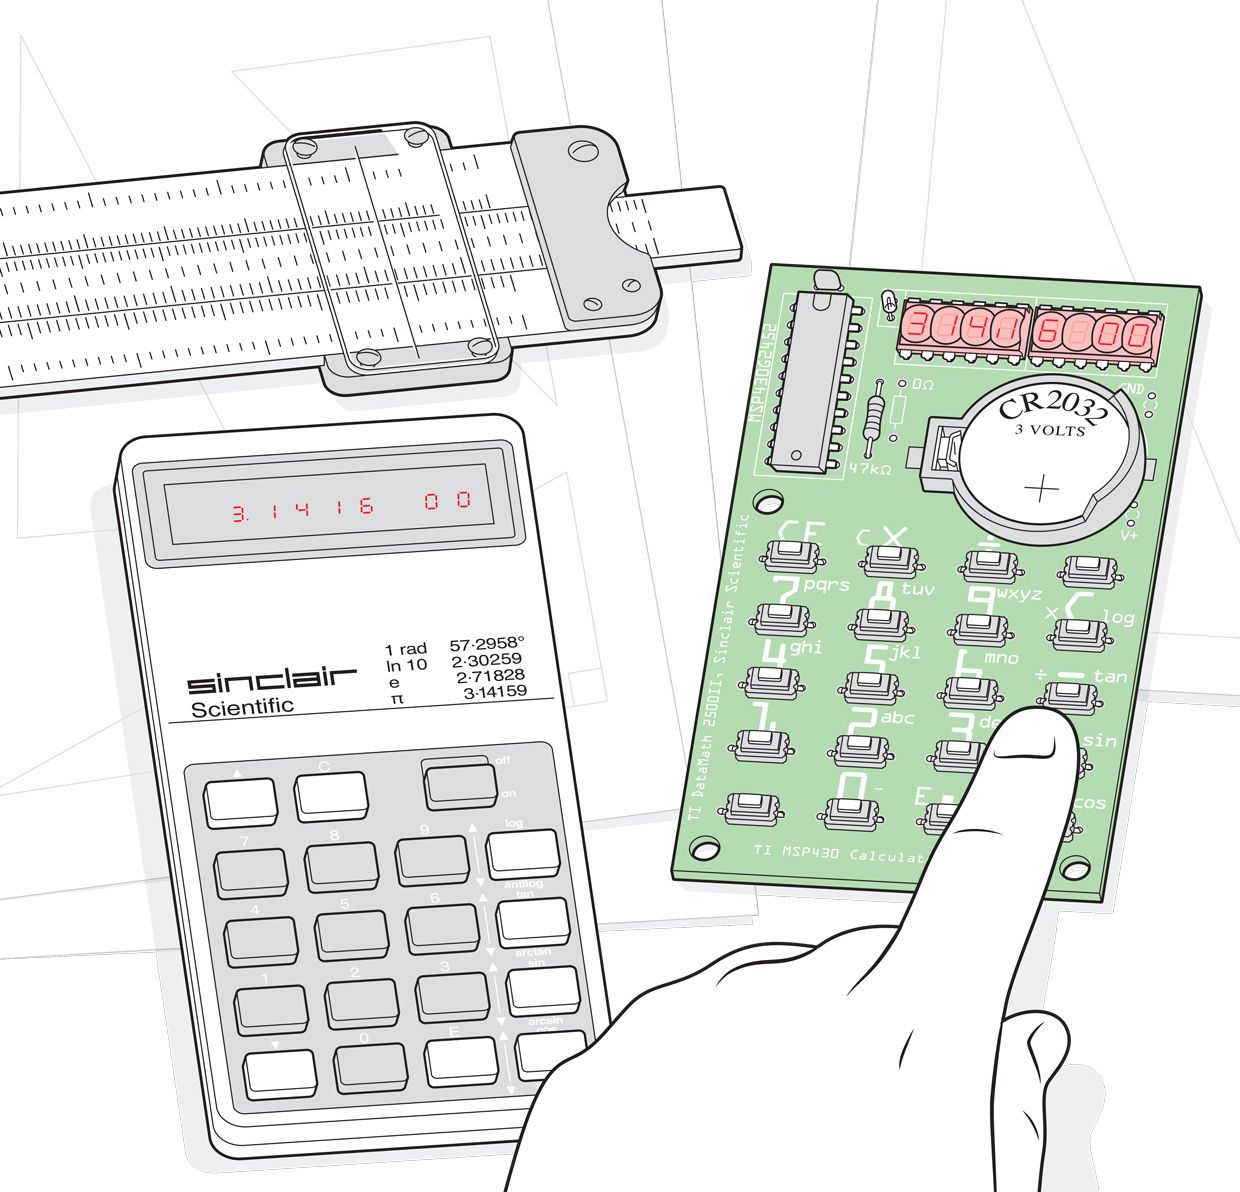 Illustration of the Sinclair Scientific calculator.